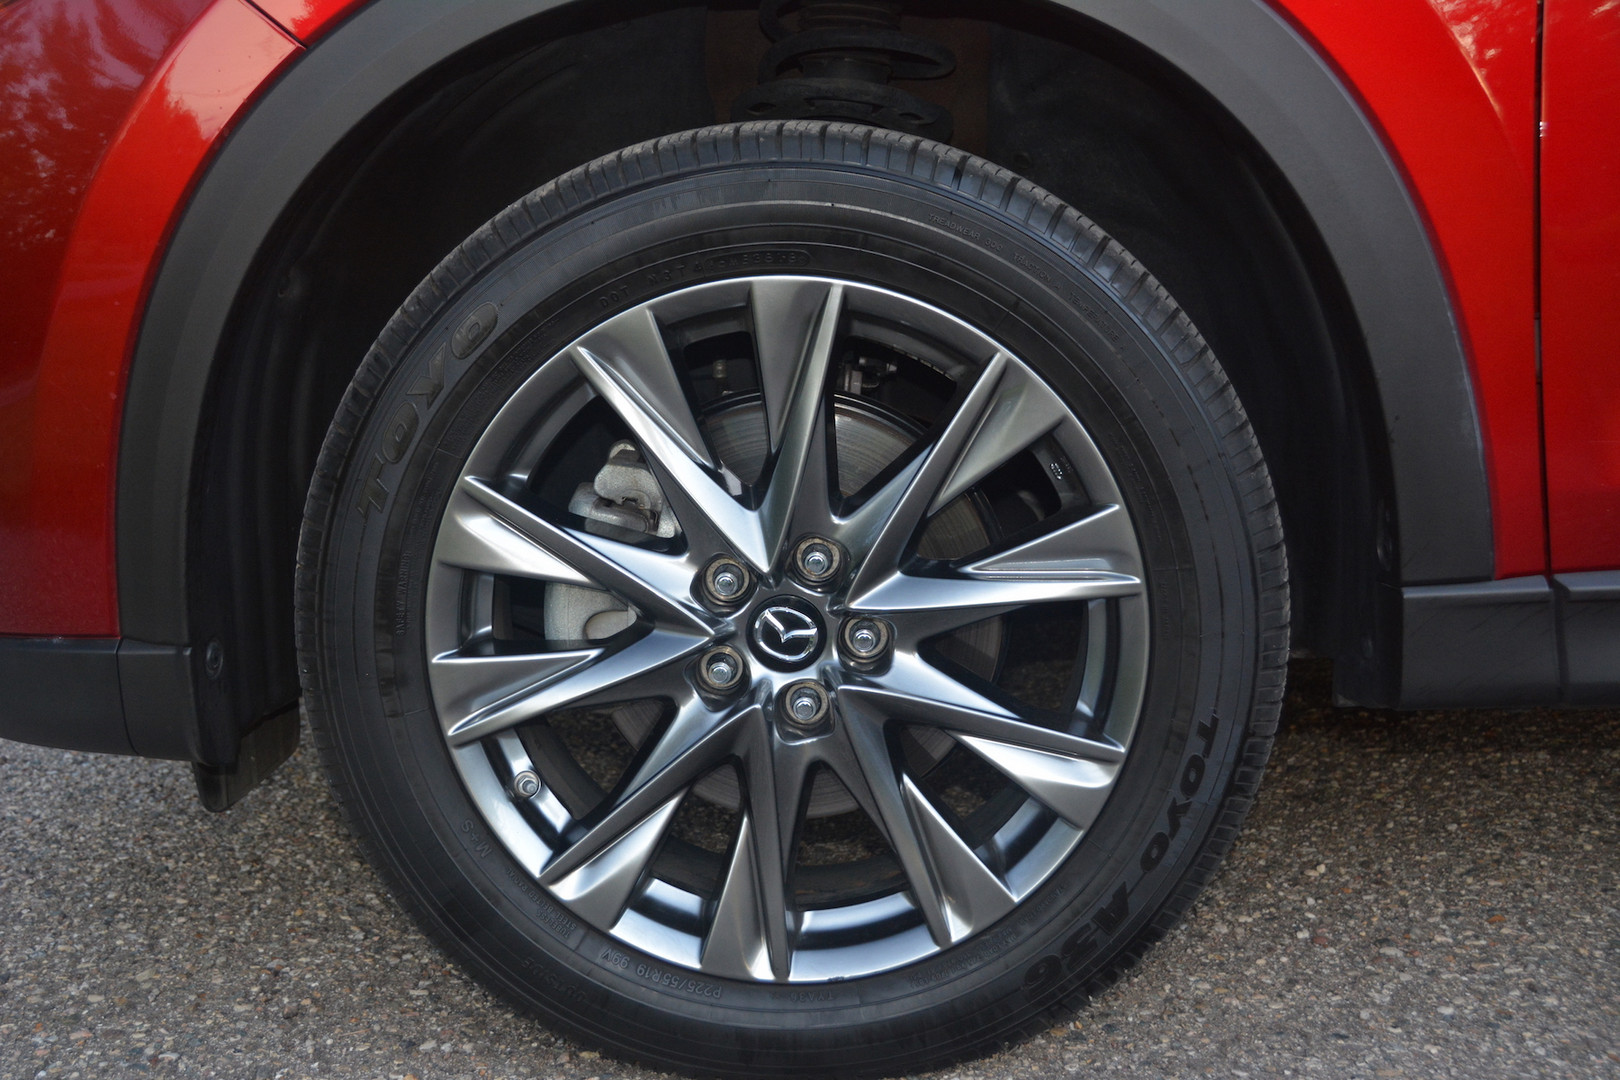 2019 Mazda CX5 Wheels